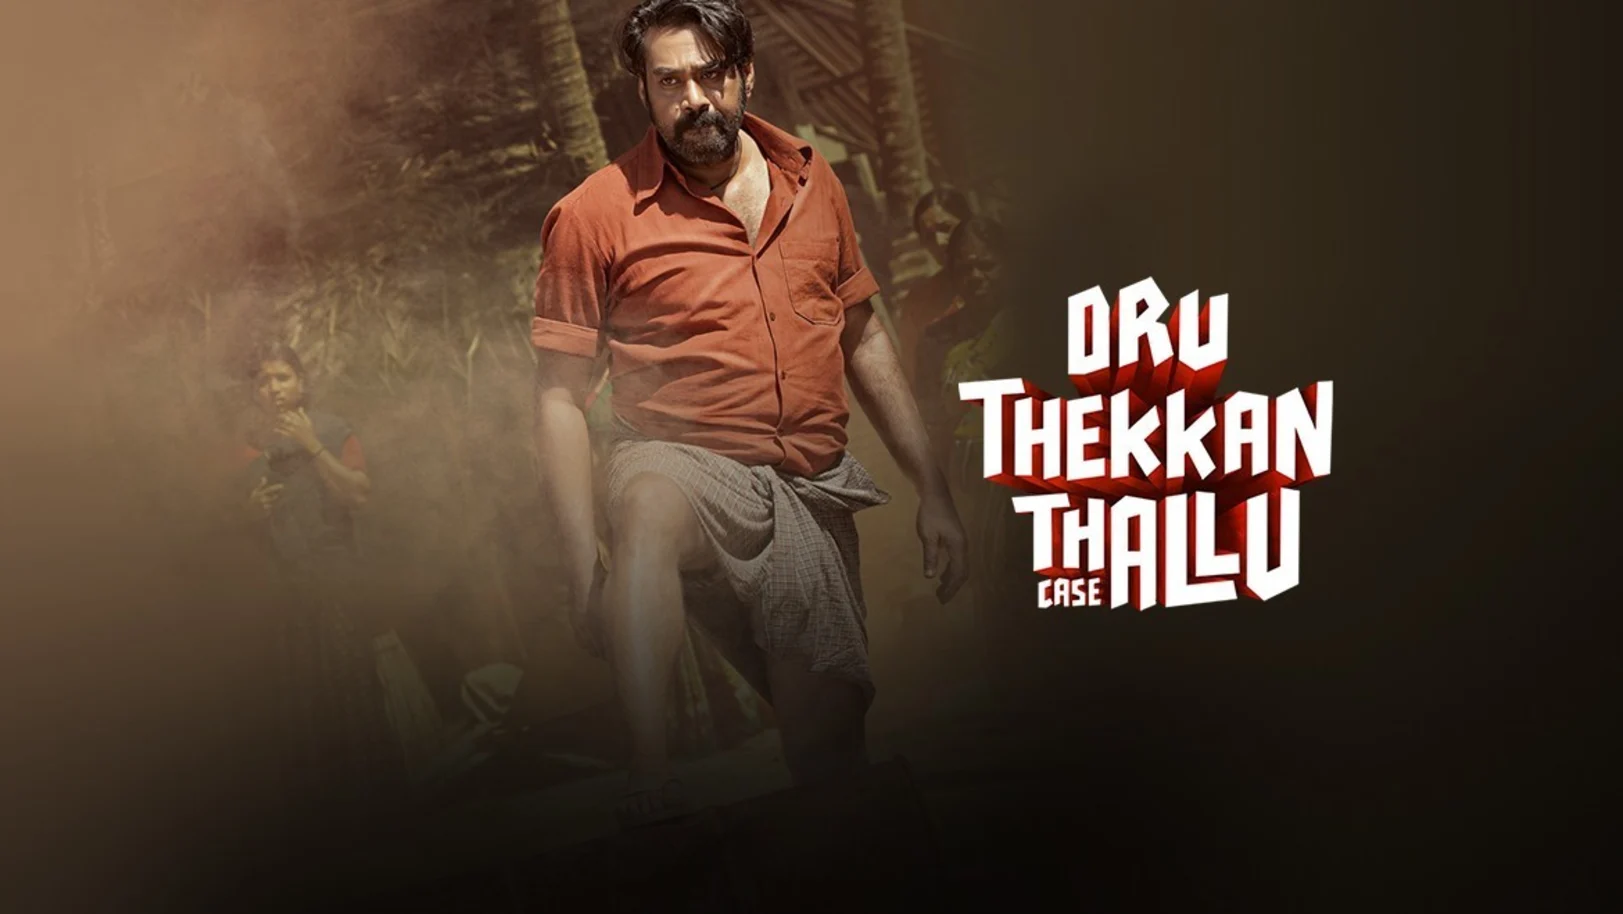 Oru Thekkan Thallu Case Movie